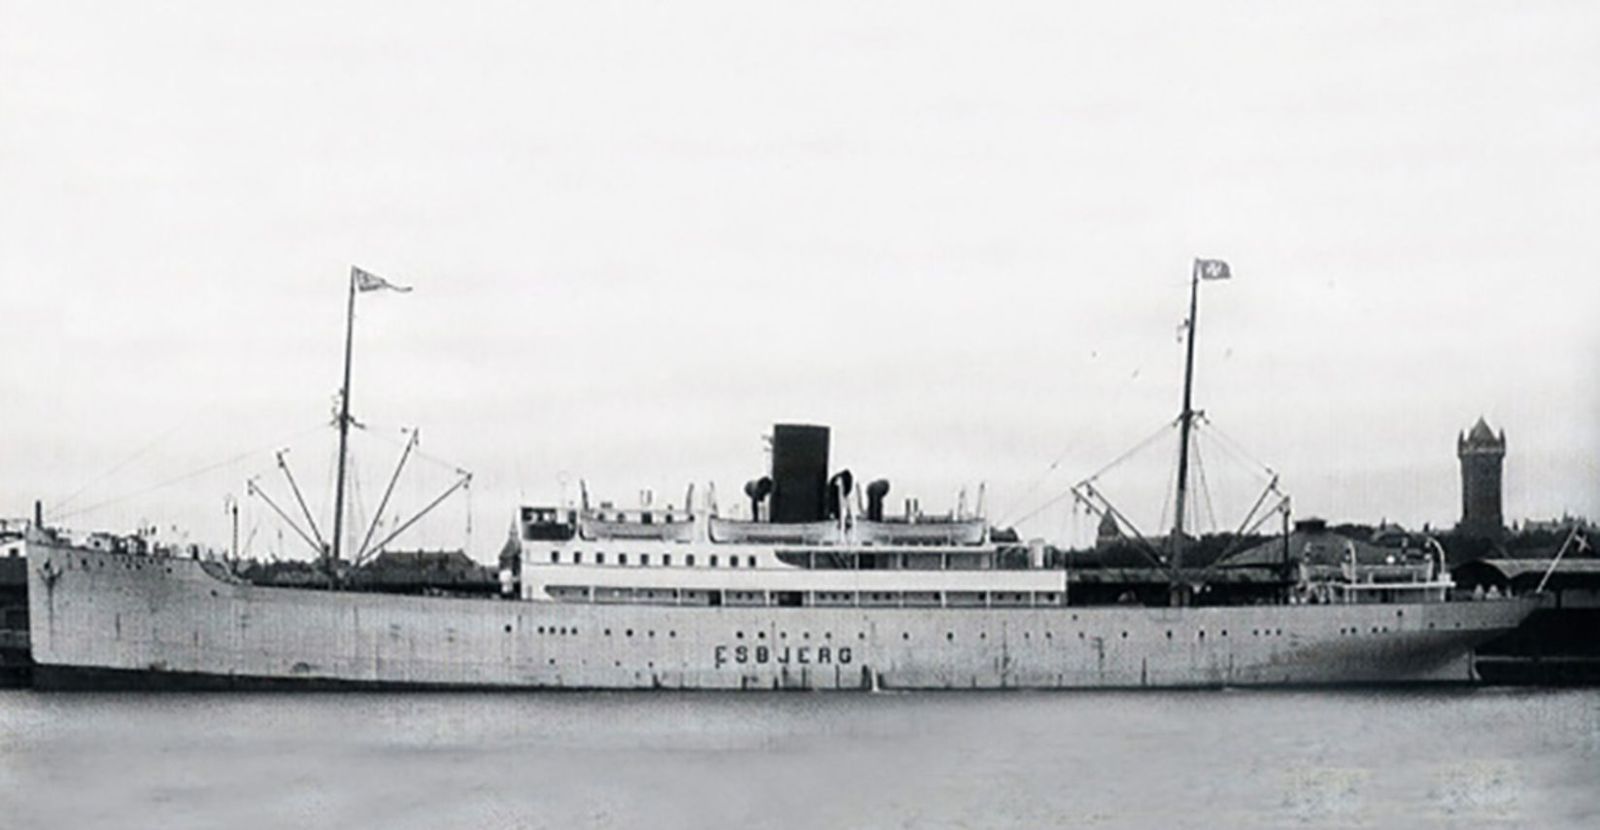 La motonau ‘Esbjerg’ amb la contrasenya de la naviliera danesa